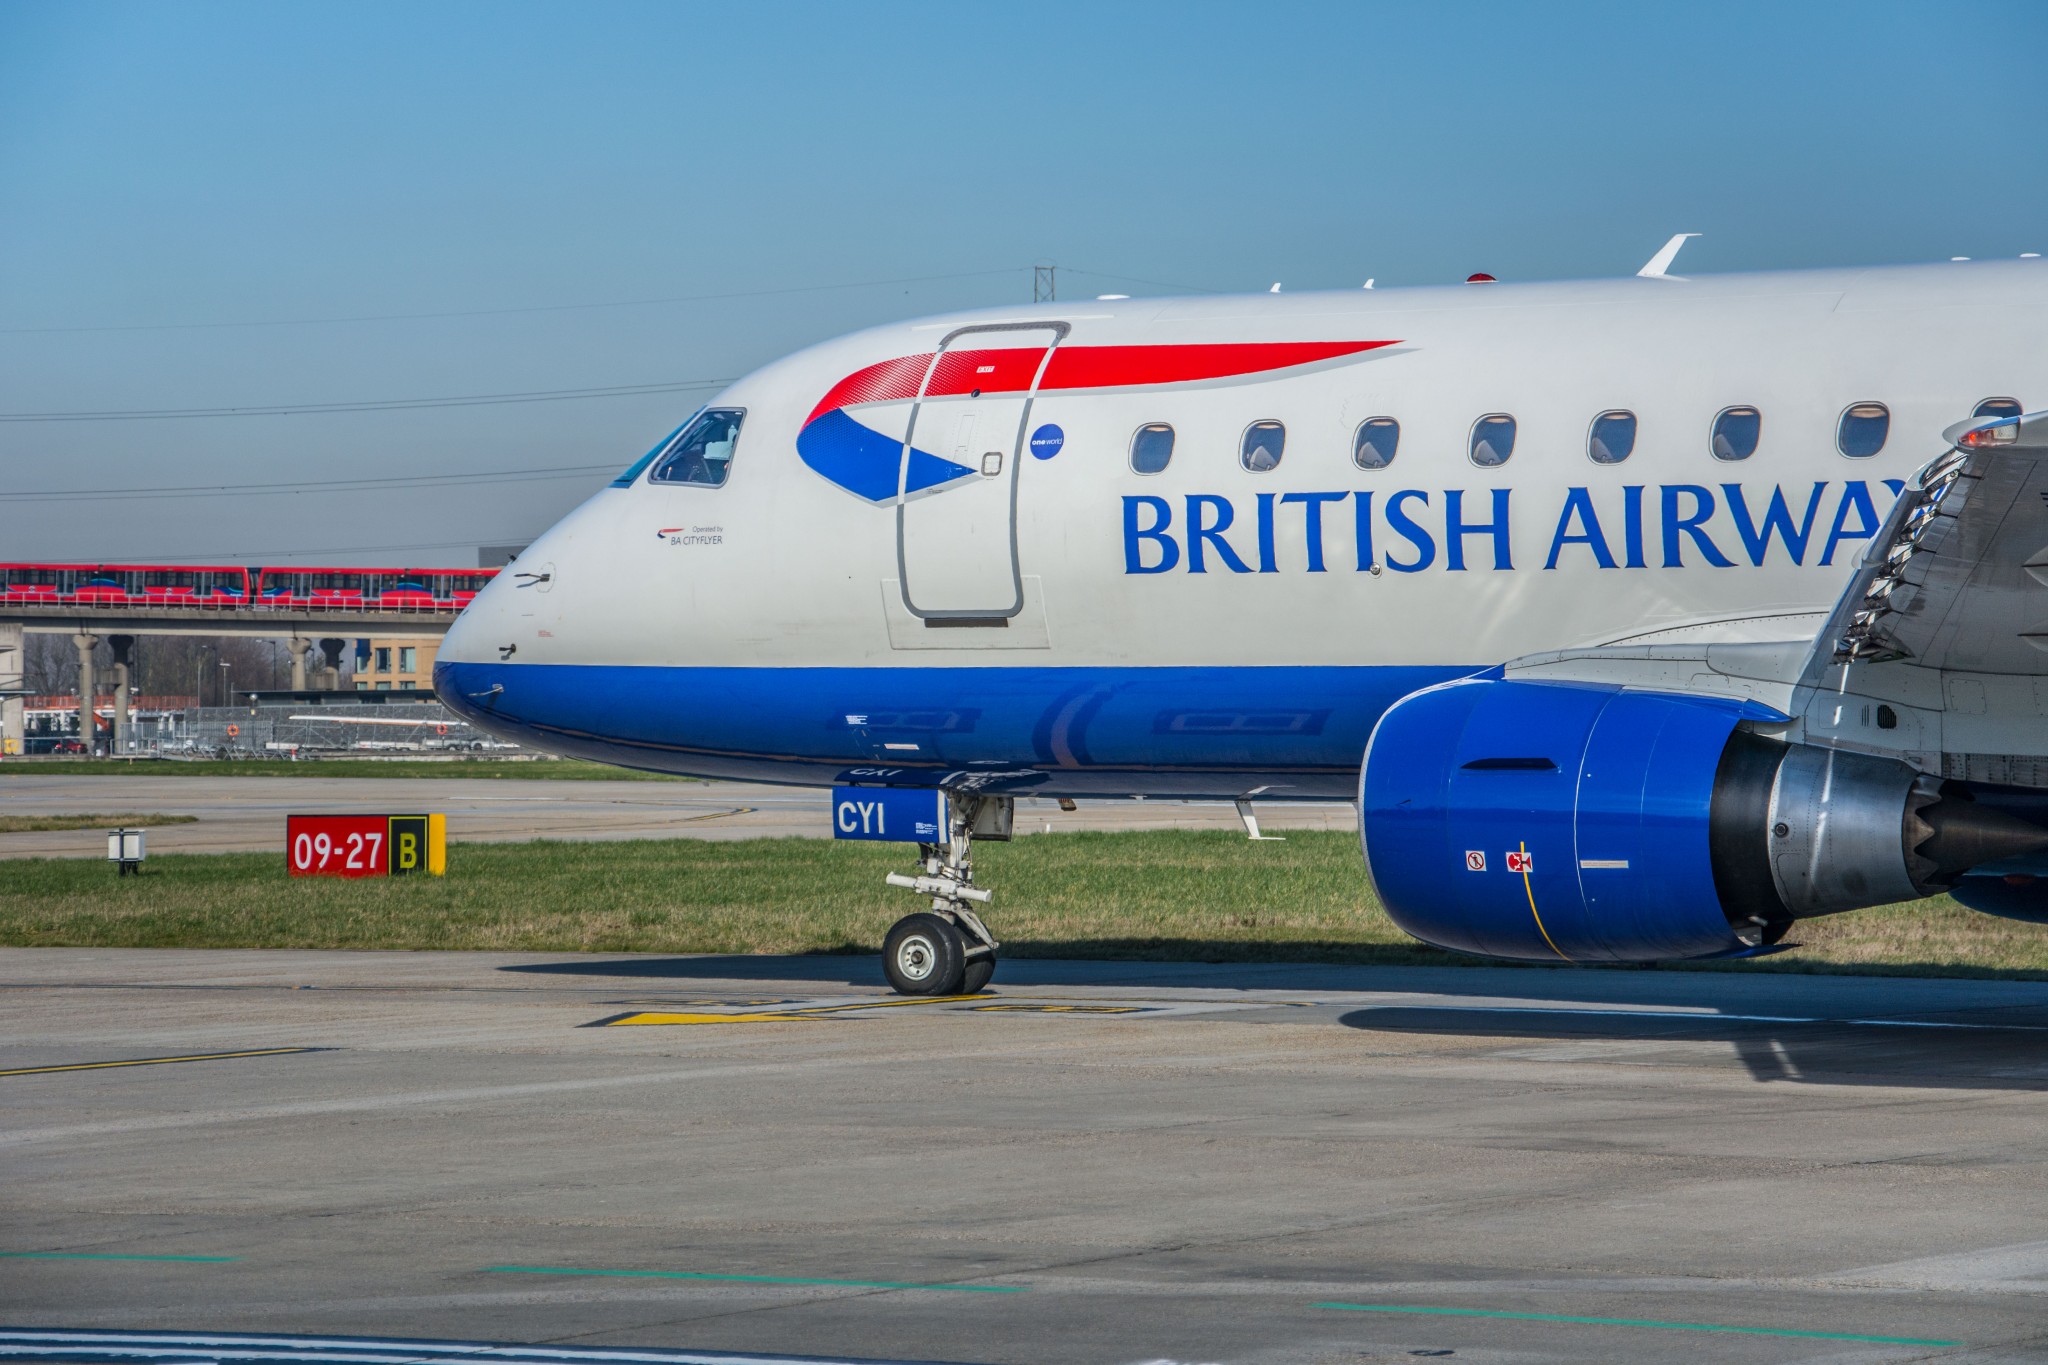 British Airways and Royal Air Maroc announced new codeshare